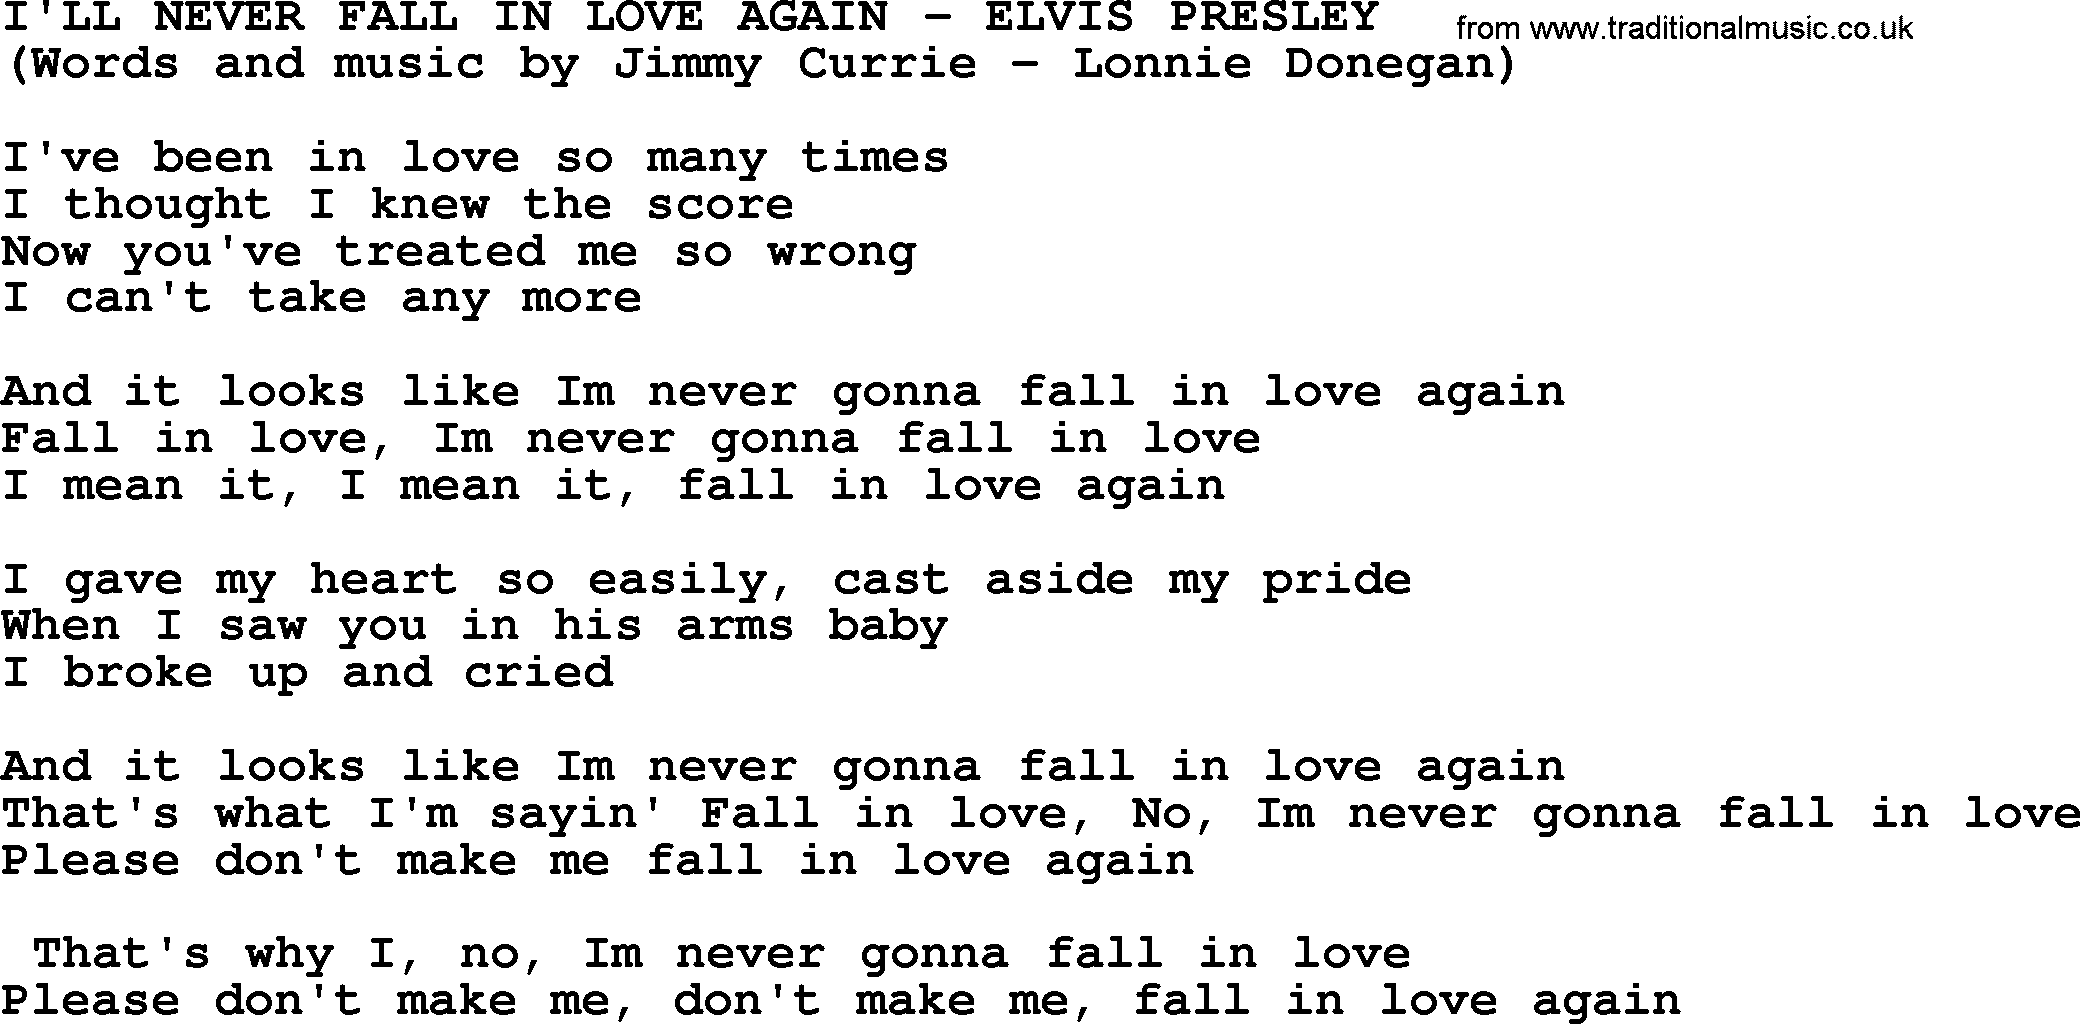 Elvis Presley song: I'll Never Fall In Love Again lyrics